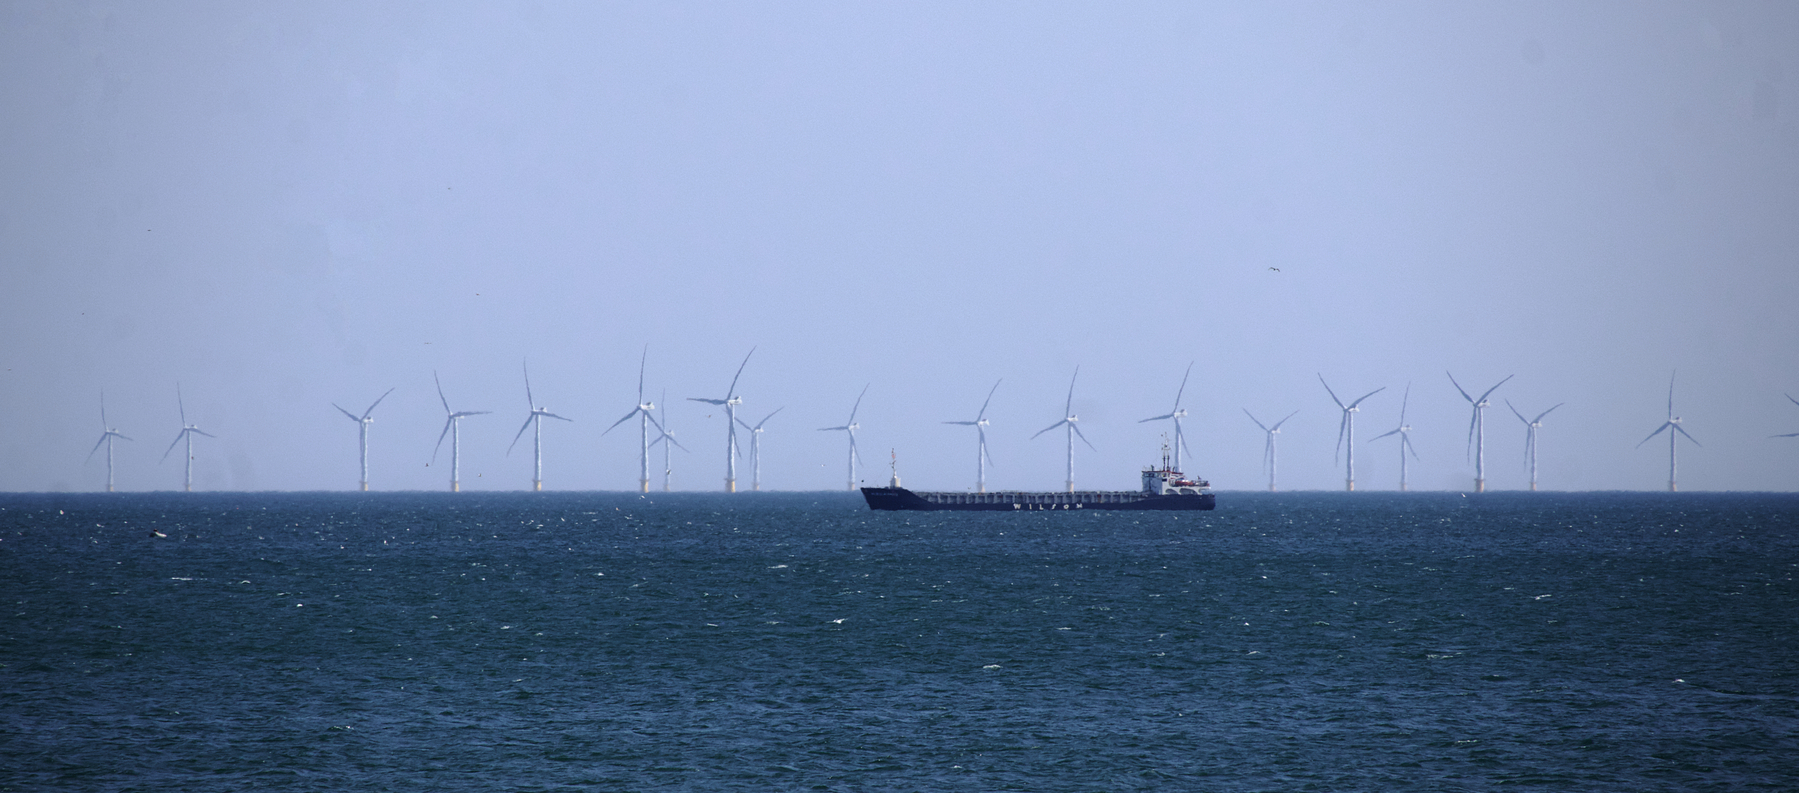 Rampion wind farm off the Sussex coast. 